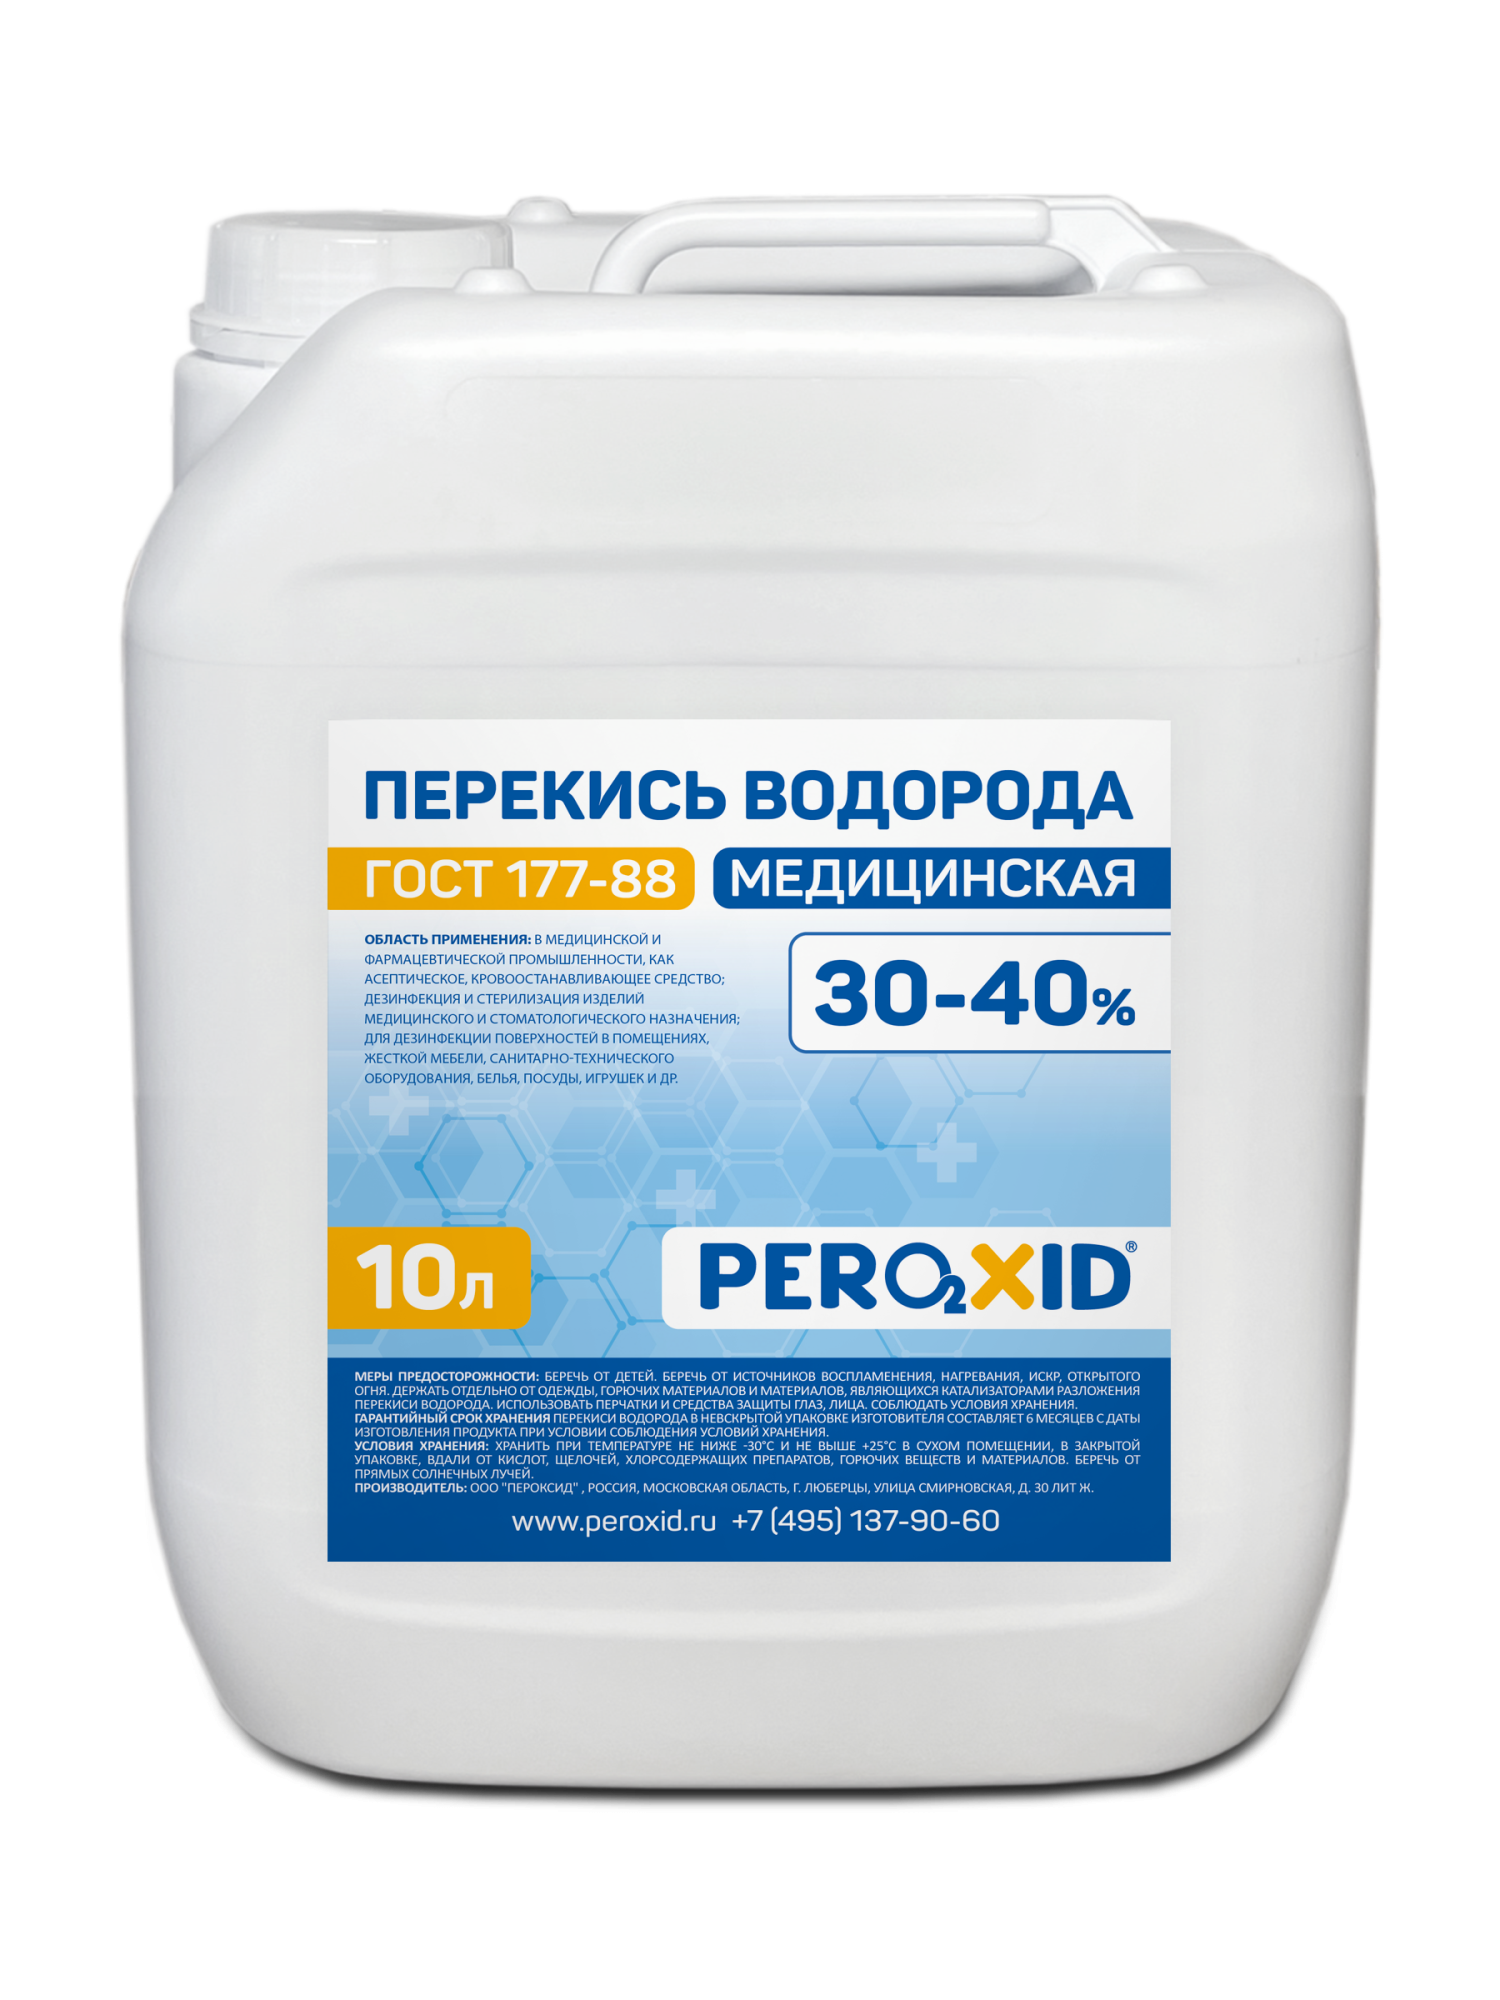 Перекись водорода медицинская PEROXID 30-40% марка  ГОСТ 177-88  10 л/12 кг